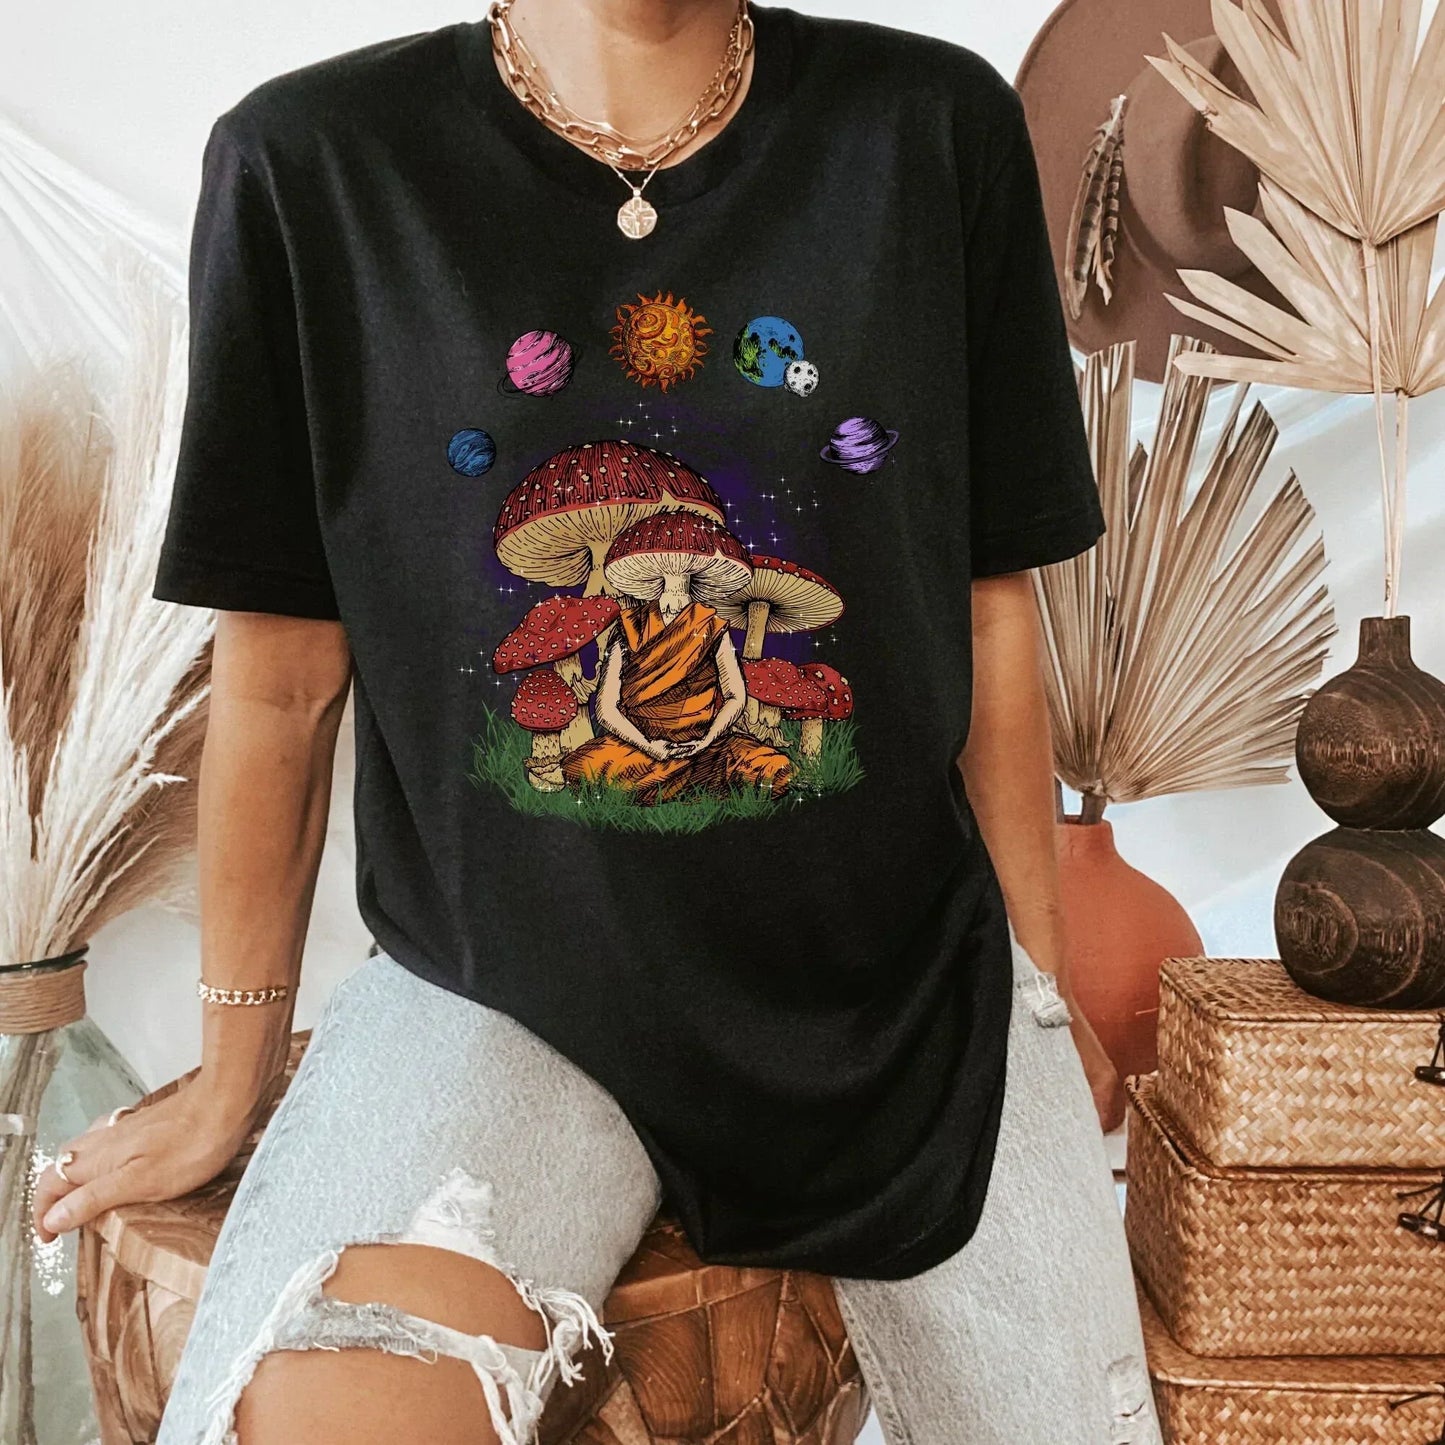 Magic Mushroom Shirt, Mushroom Sweater, Celestial Shirt, Dark Academia, Goblincore Clothing, Pastel Goth Sweatshirt, Moon Cottagecore Shirt HMDesignStudioUS